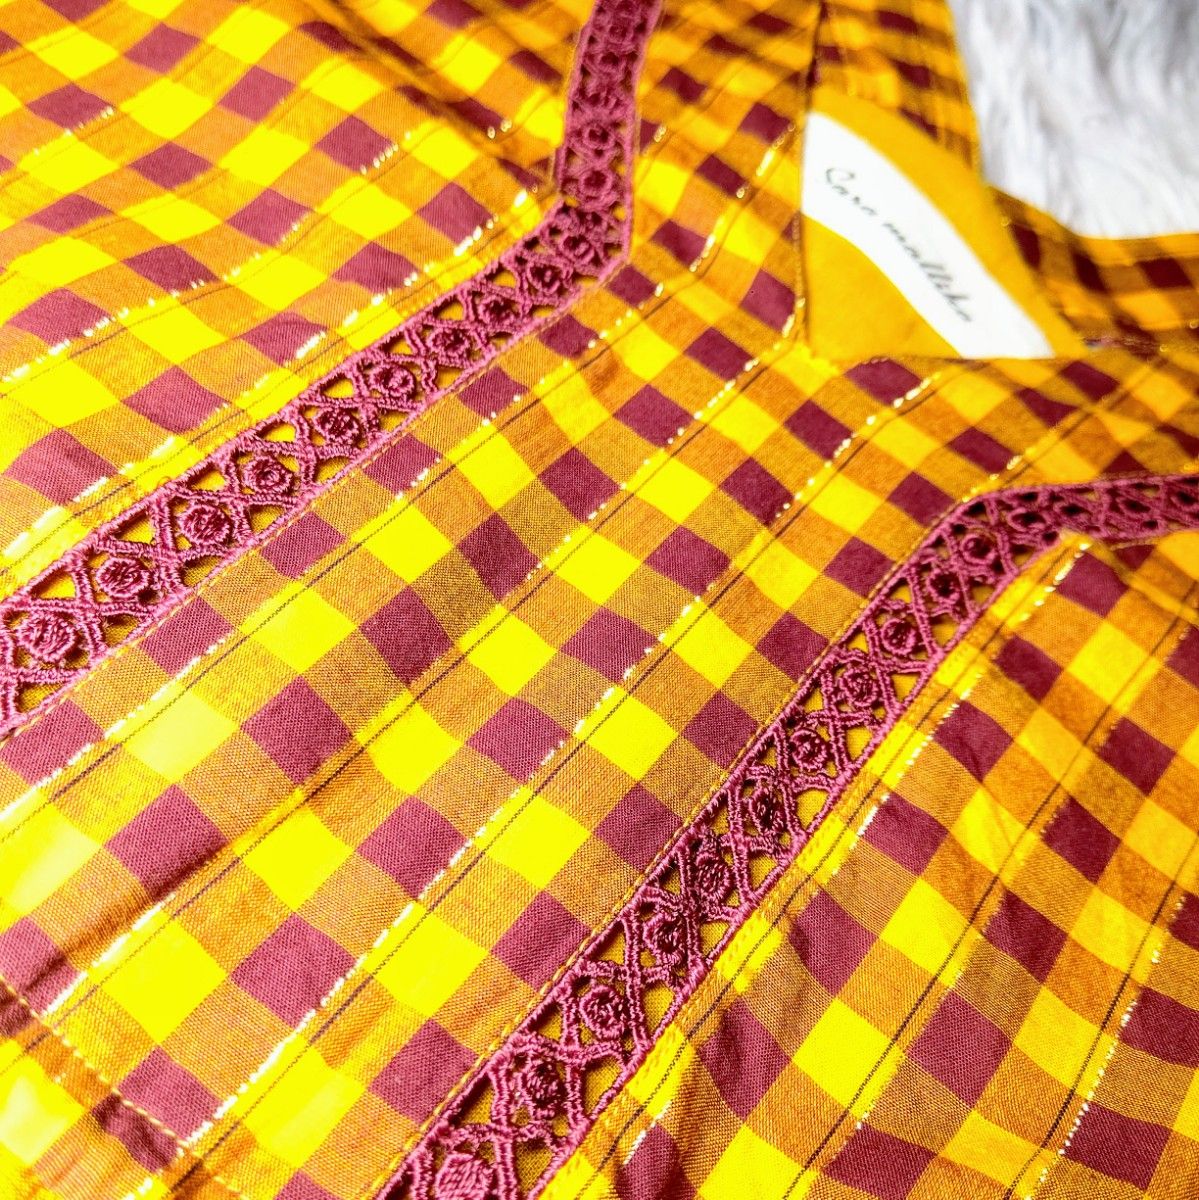 Sara mallika ロングワンピース チェック インド製 大きいサイズ フレア 刺繍 レース 腰紐 ヌキパテ